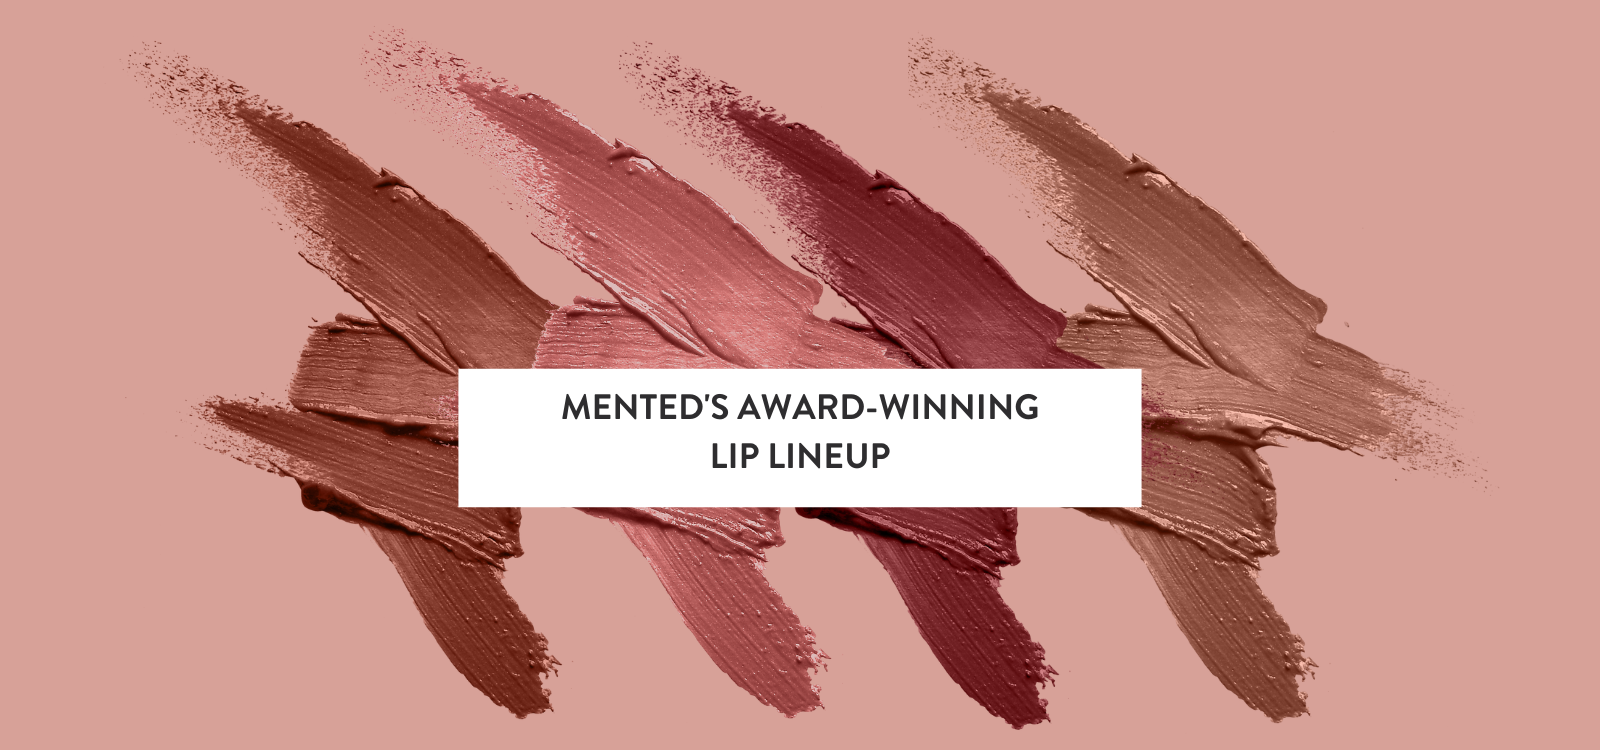 Mented's Award-Winning Lip Lineup